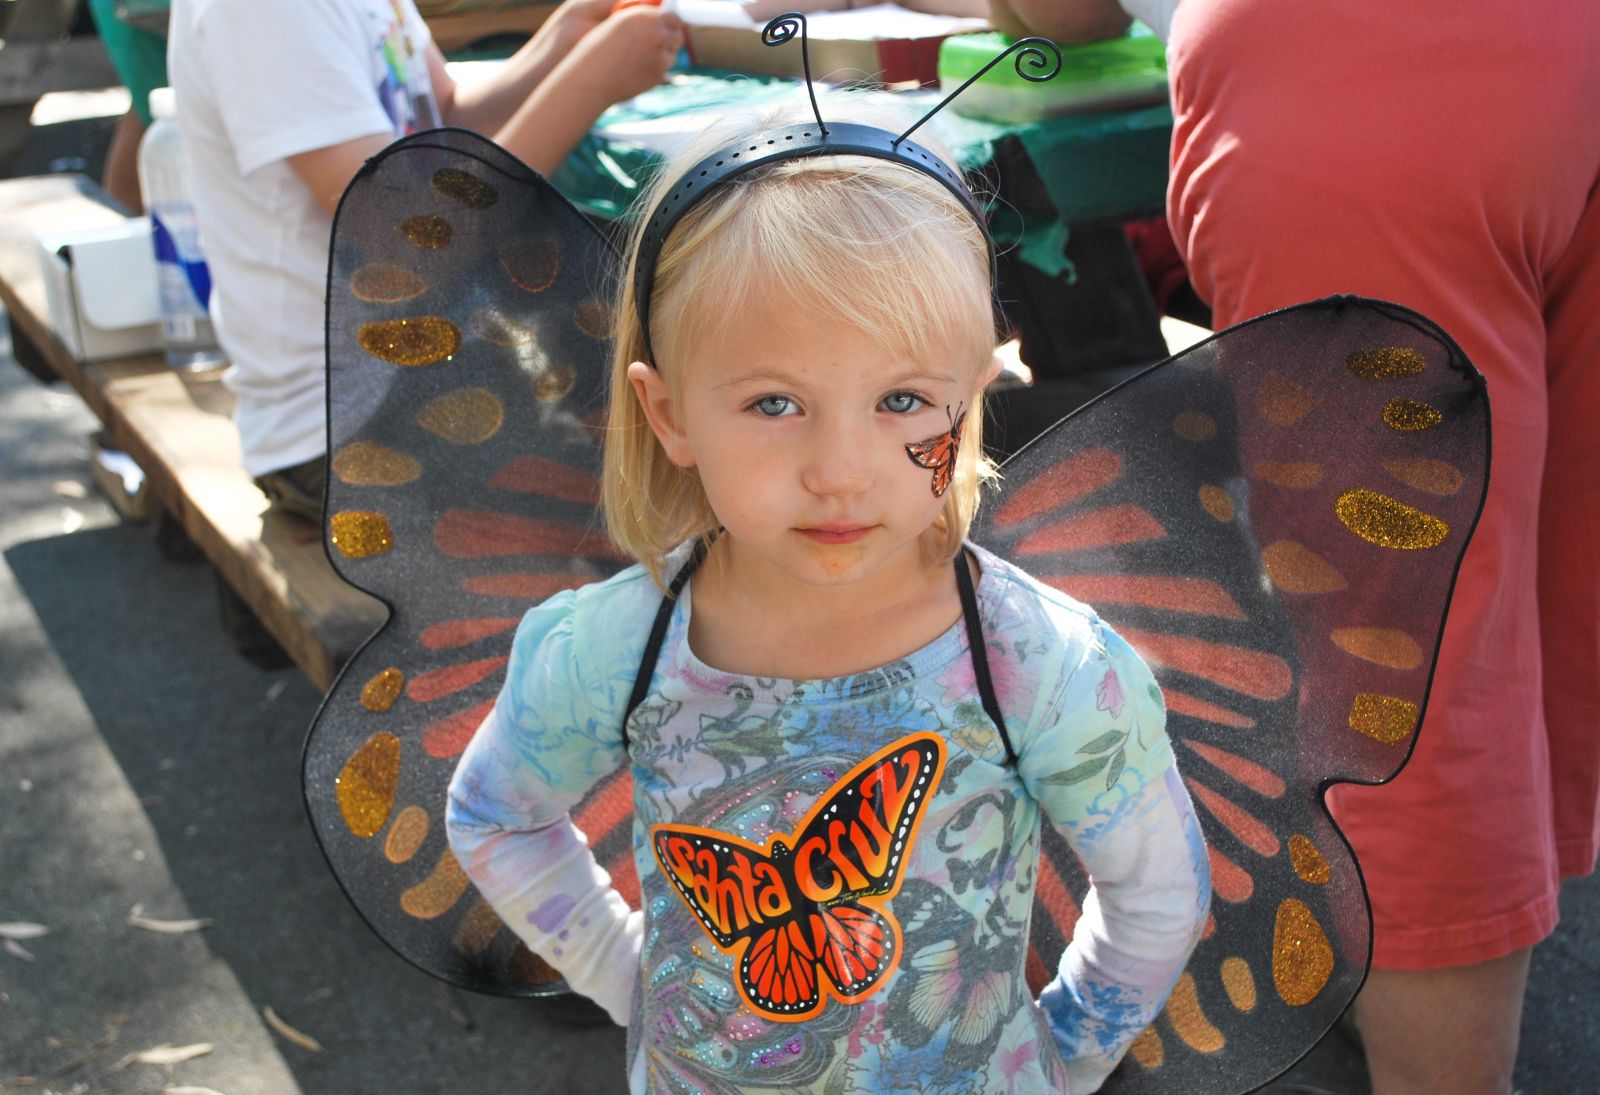 A child wearing butterfly wings